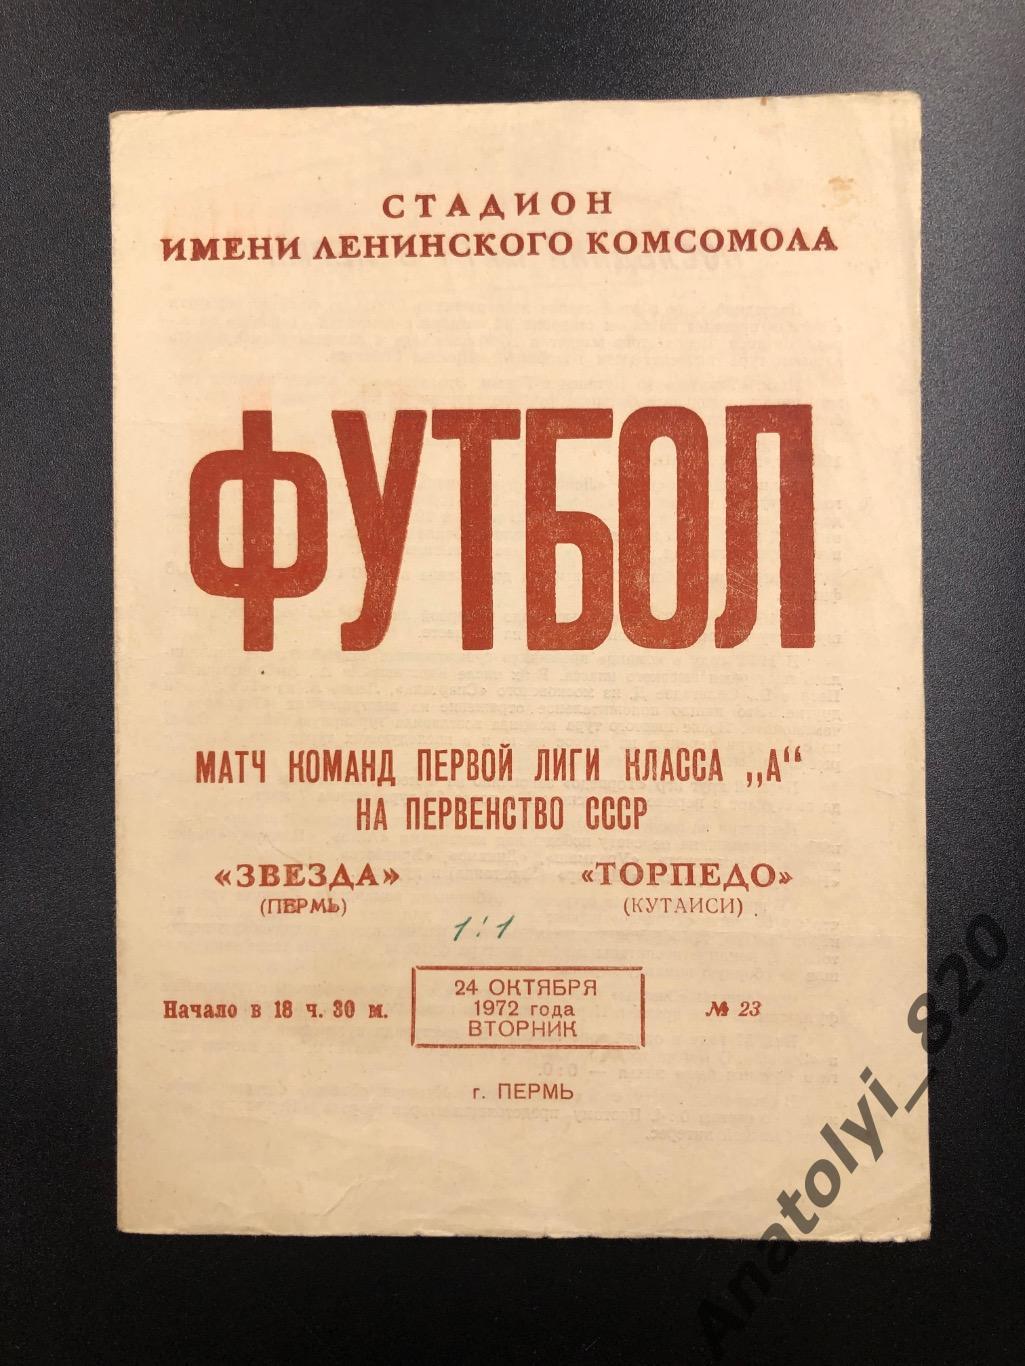 Звезда Пермь - Торпедо Кутаиси, 24.10.1972